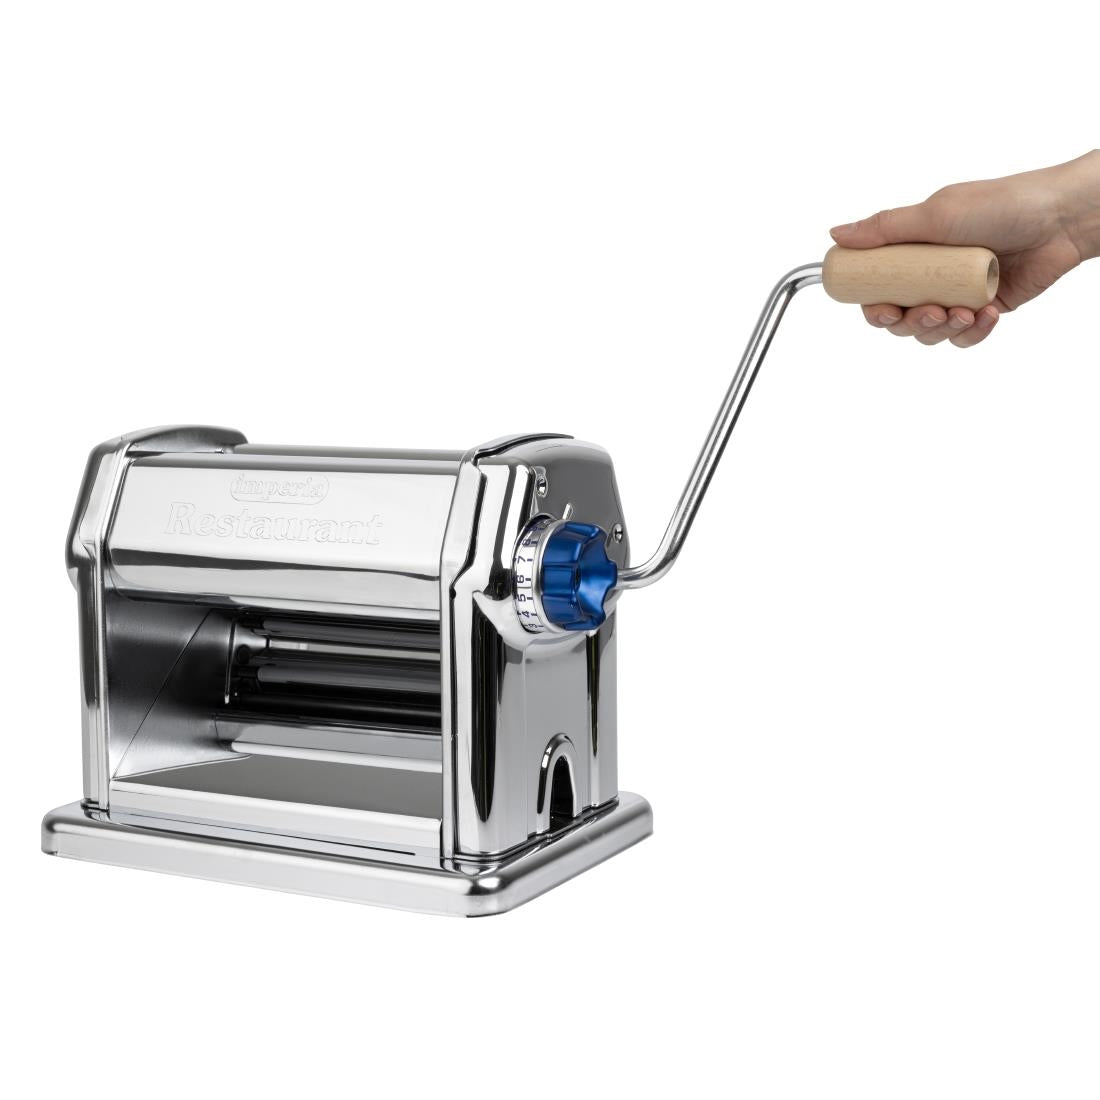 Imperia Manual Pasta Machine K581 JD Catering Equipment Solutions Ltd